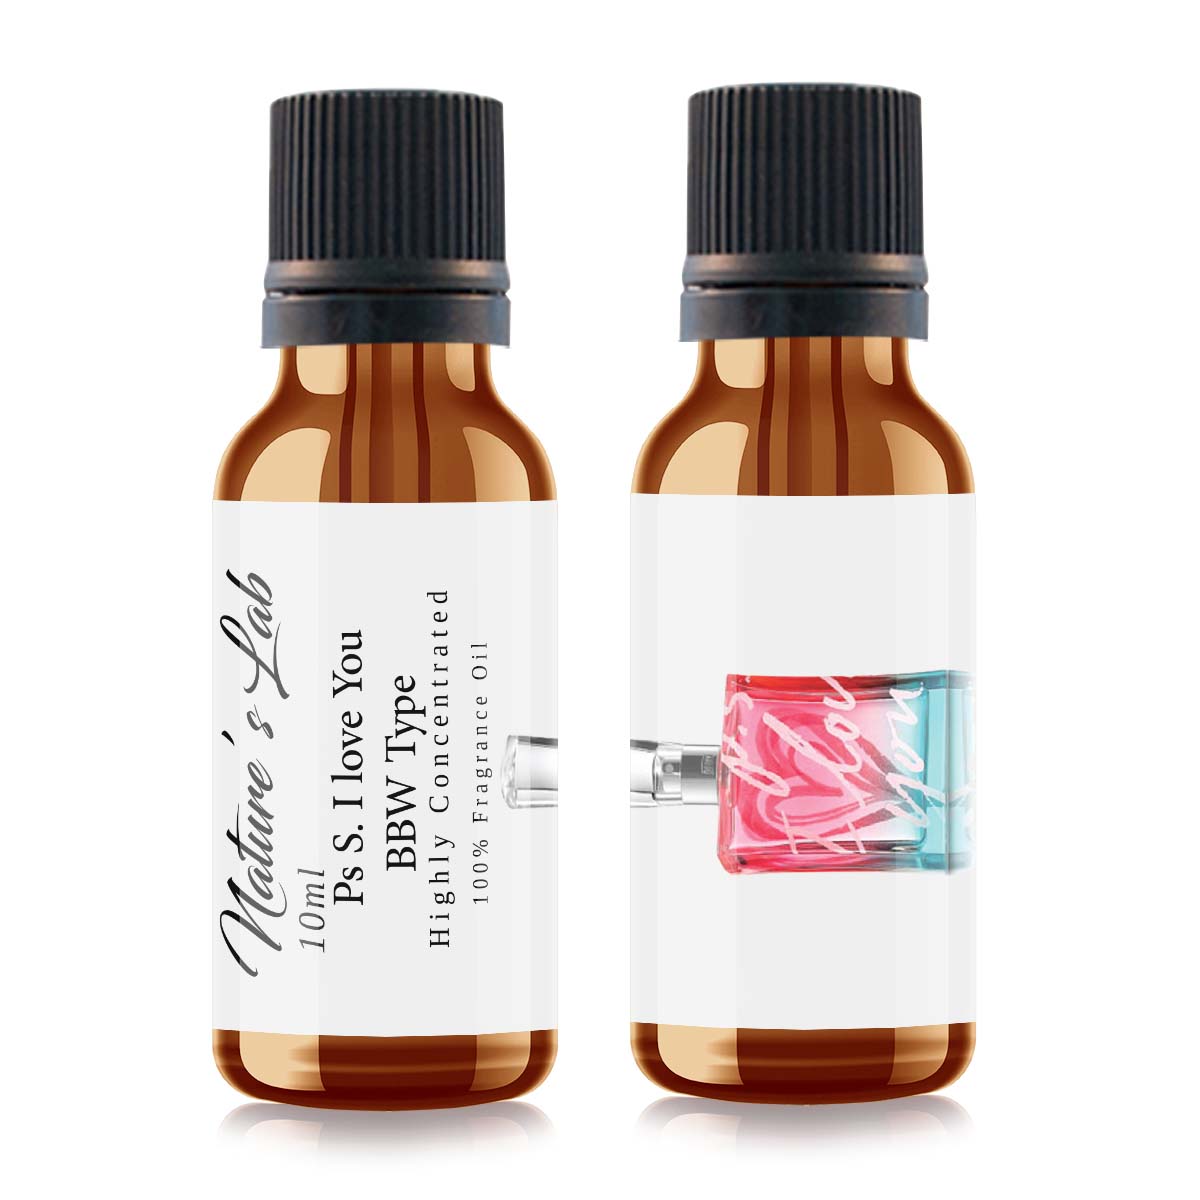 Love Spell Type Fragrance Oil for Birthday Soap Making Supplies